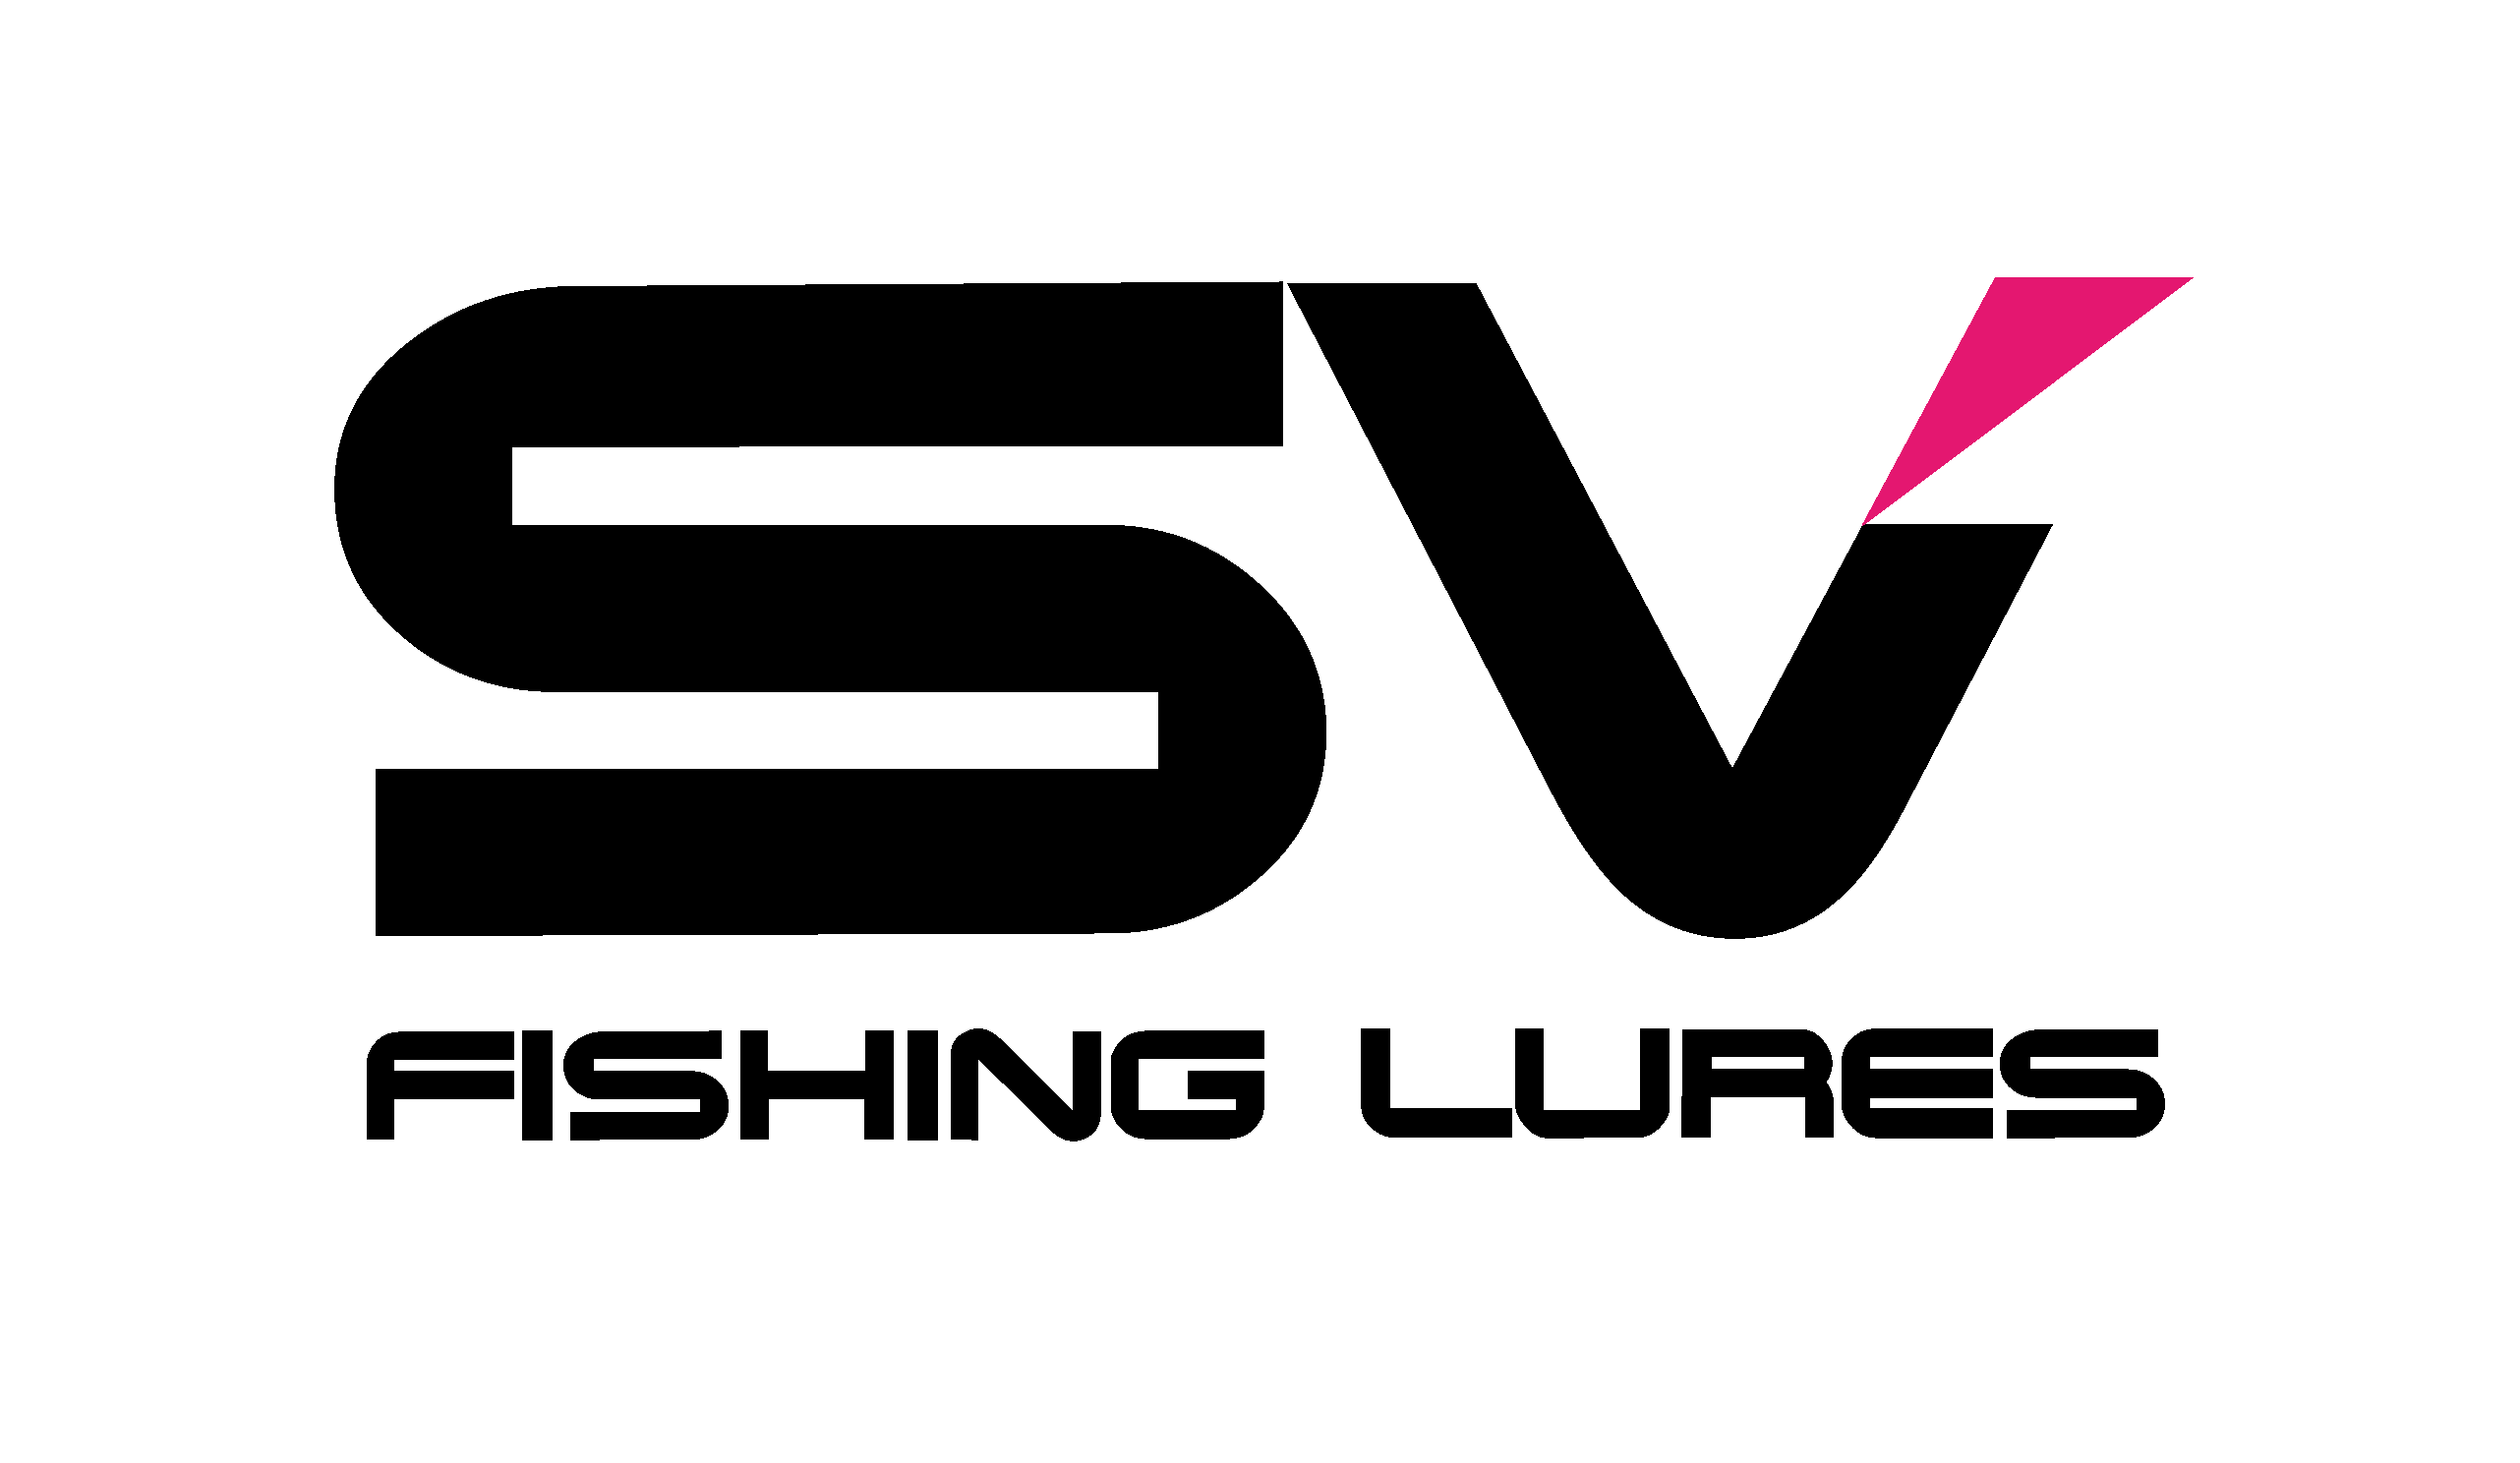 SV Fishing Lures